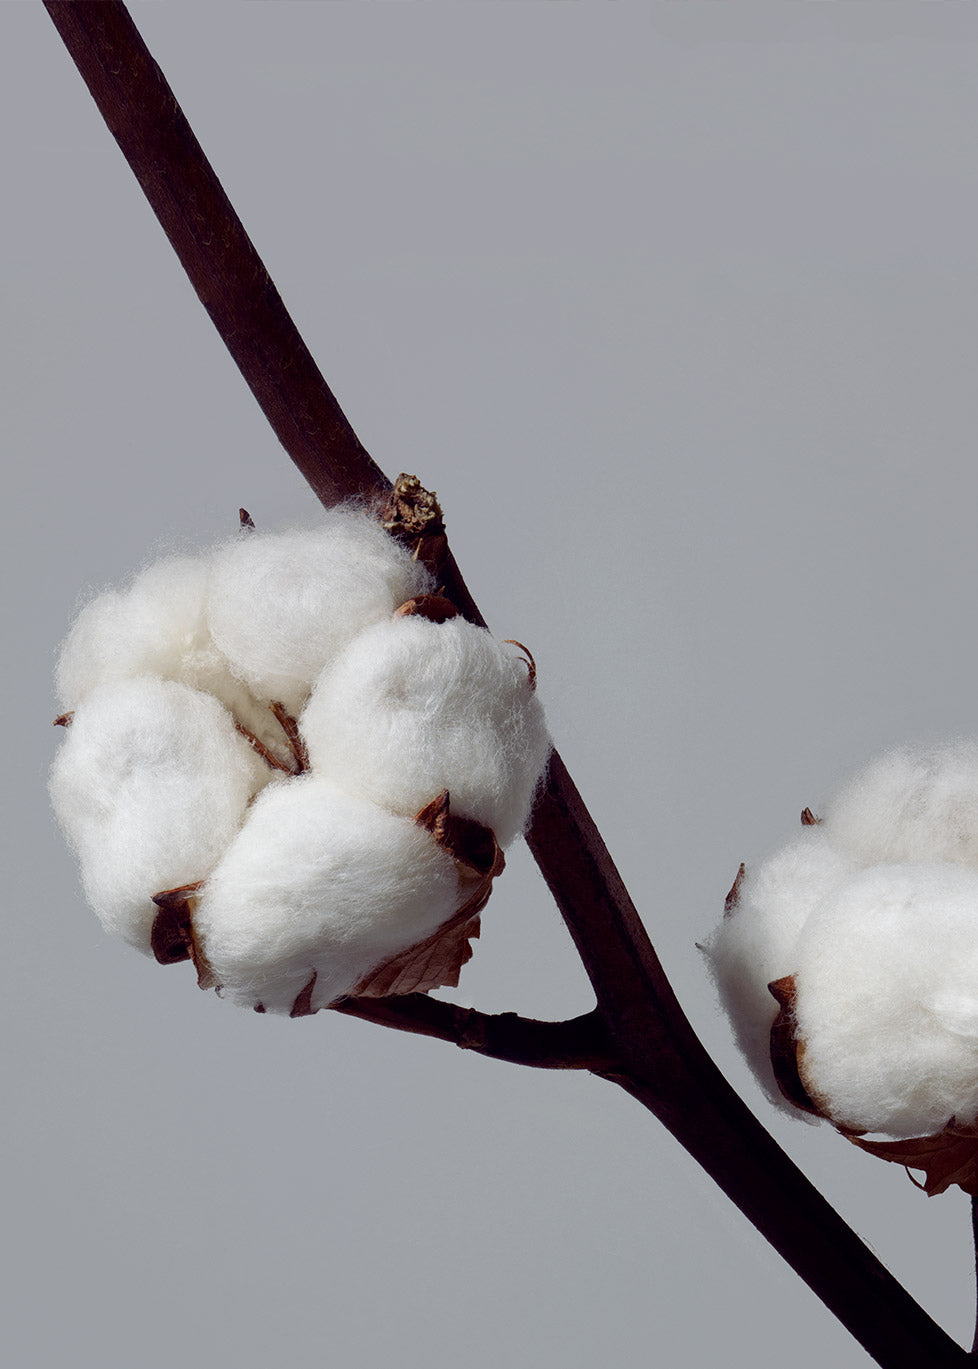 Supima Cotton: Quality and Responsibility